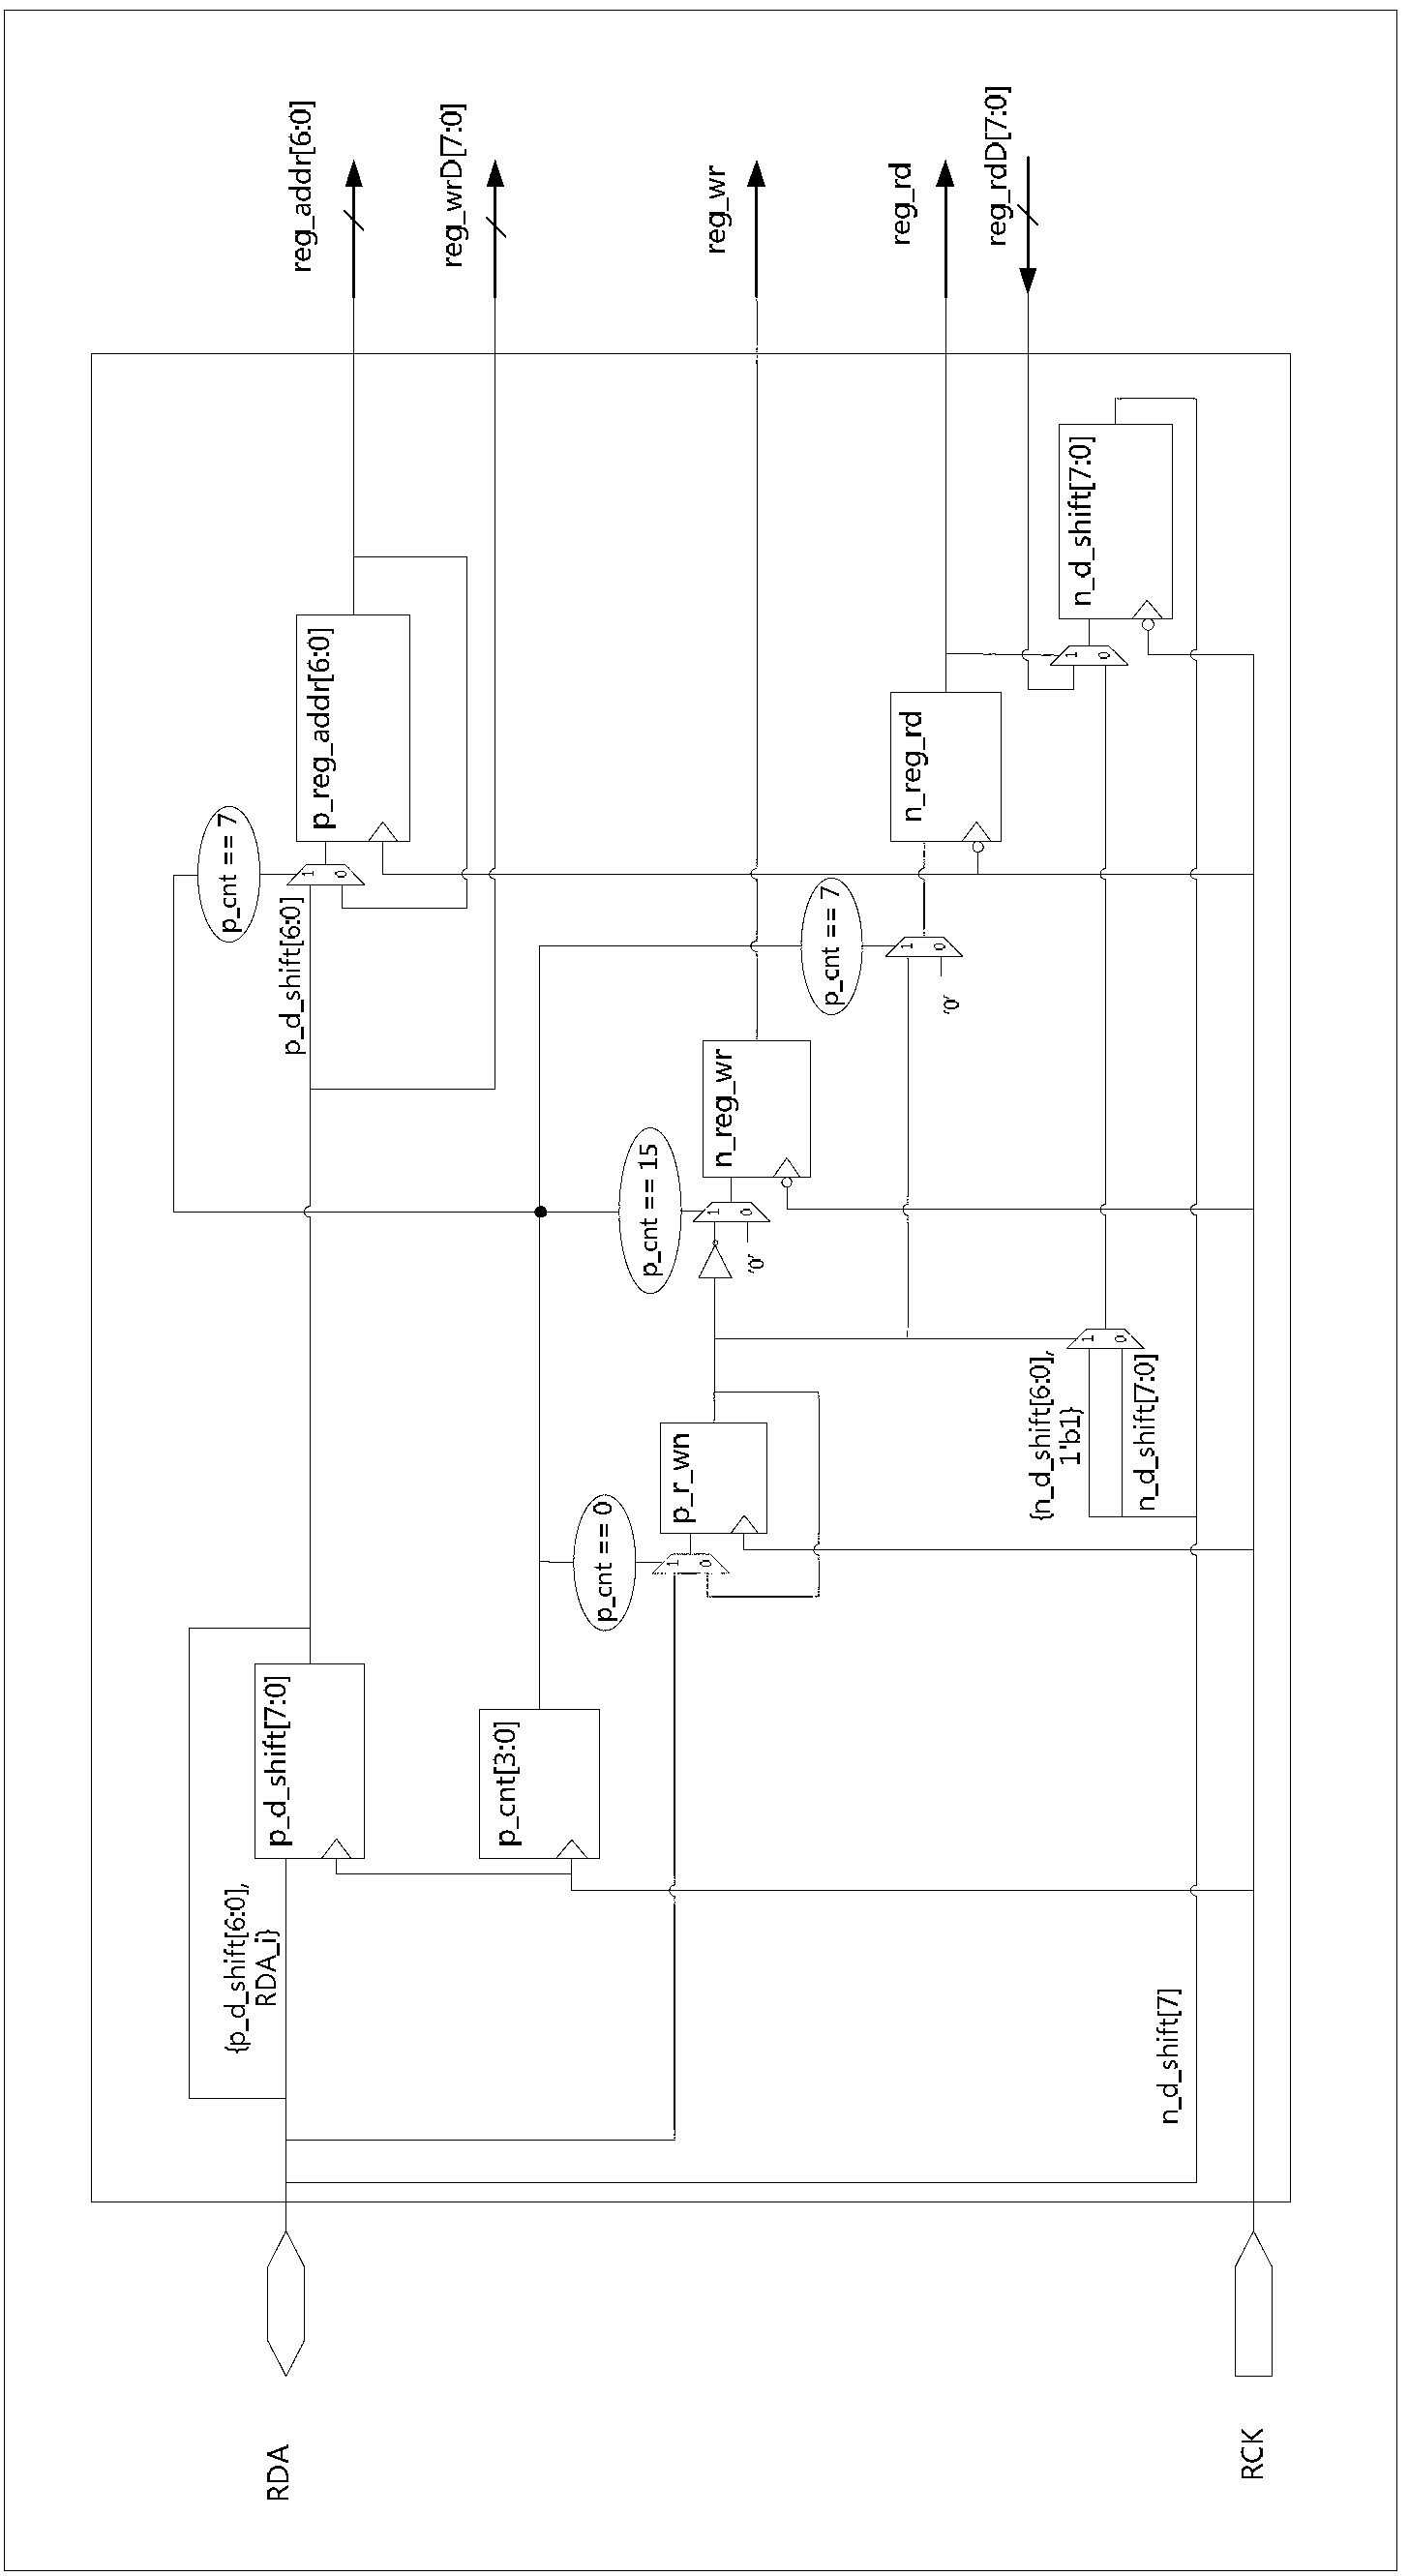 Dual-port peripheral configuration interface circuit